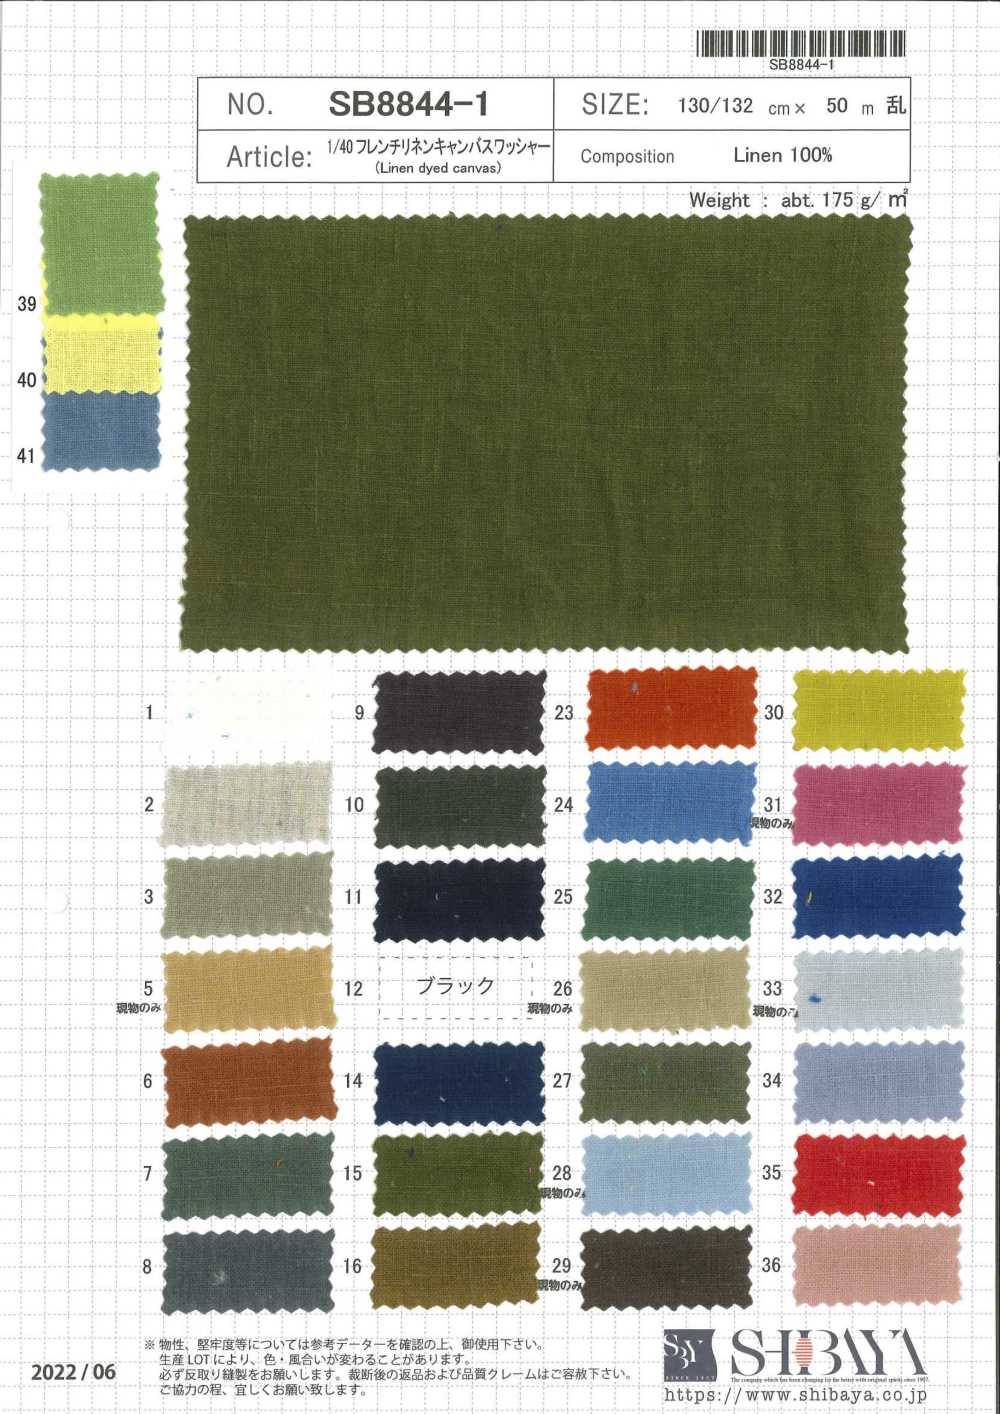 SB8844-1 1/40 French Linen Canvas Washer Processing[Textile / Fabric] SHIBAYA